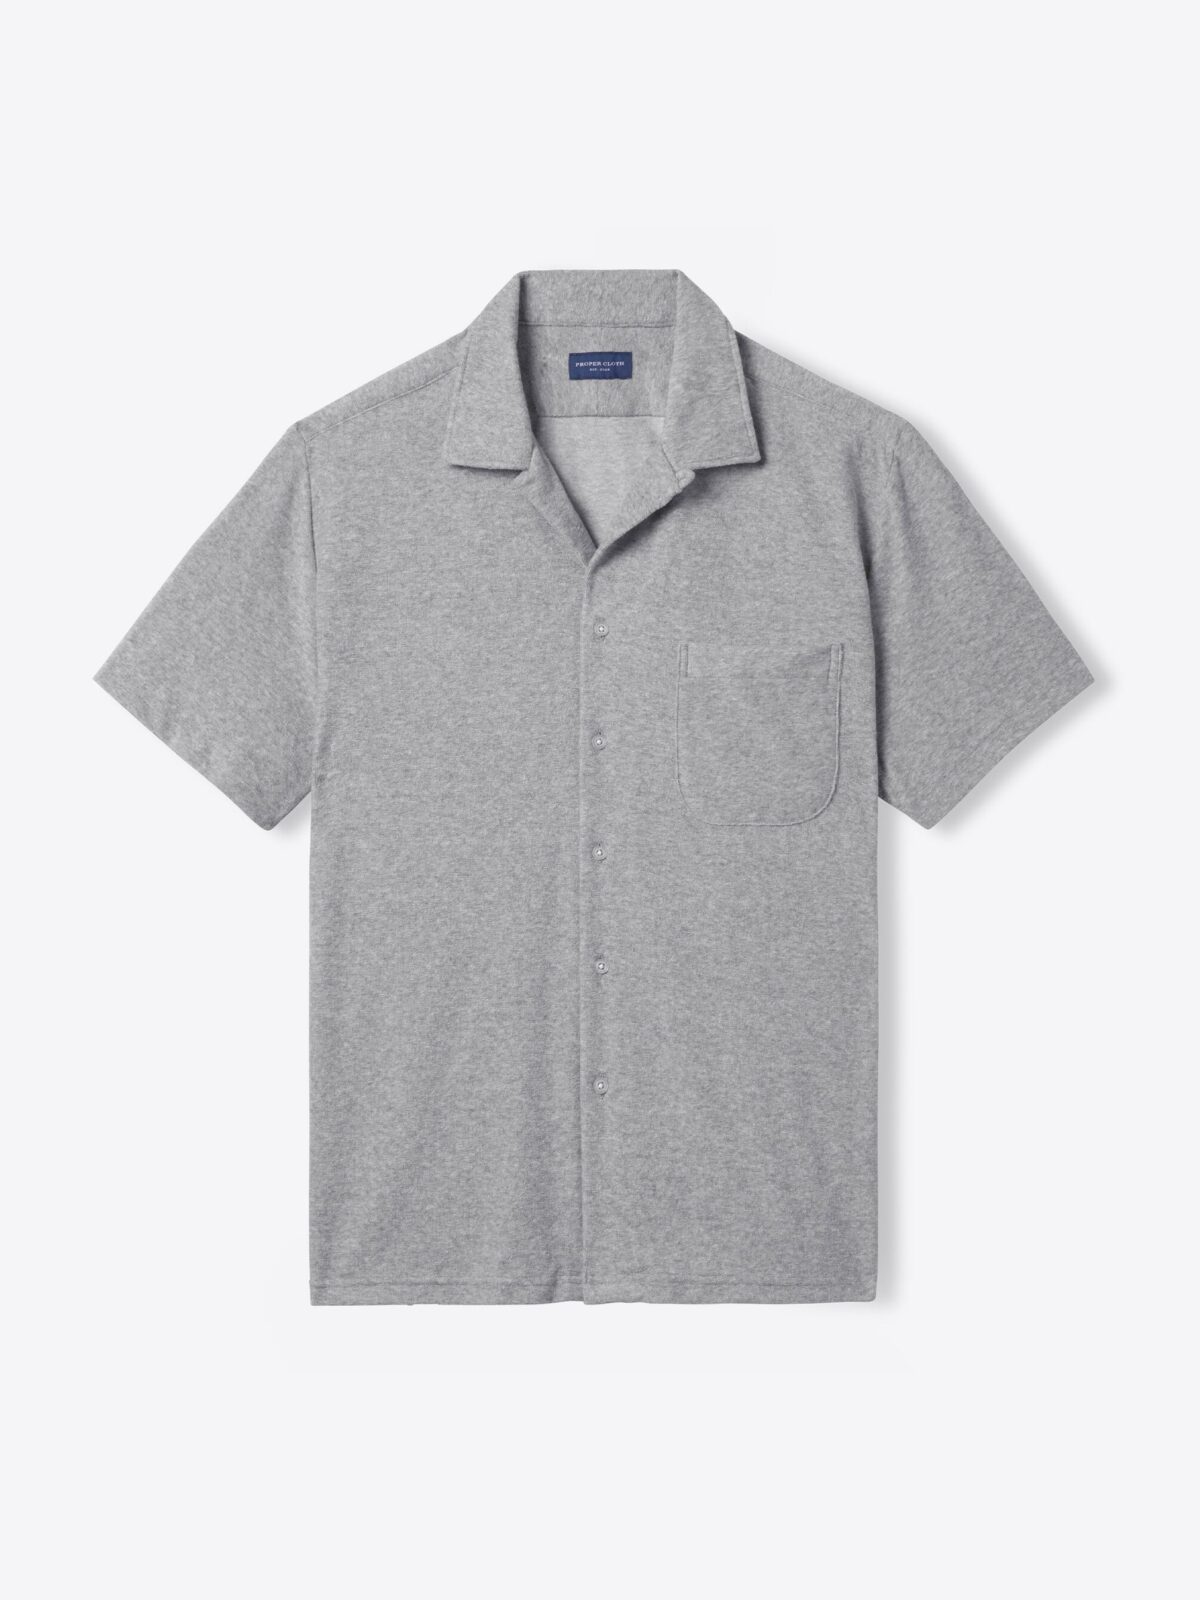 Japanese Grey Melange Terry Cloth Knit Shirt